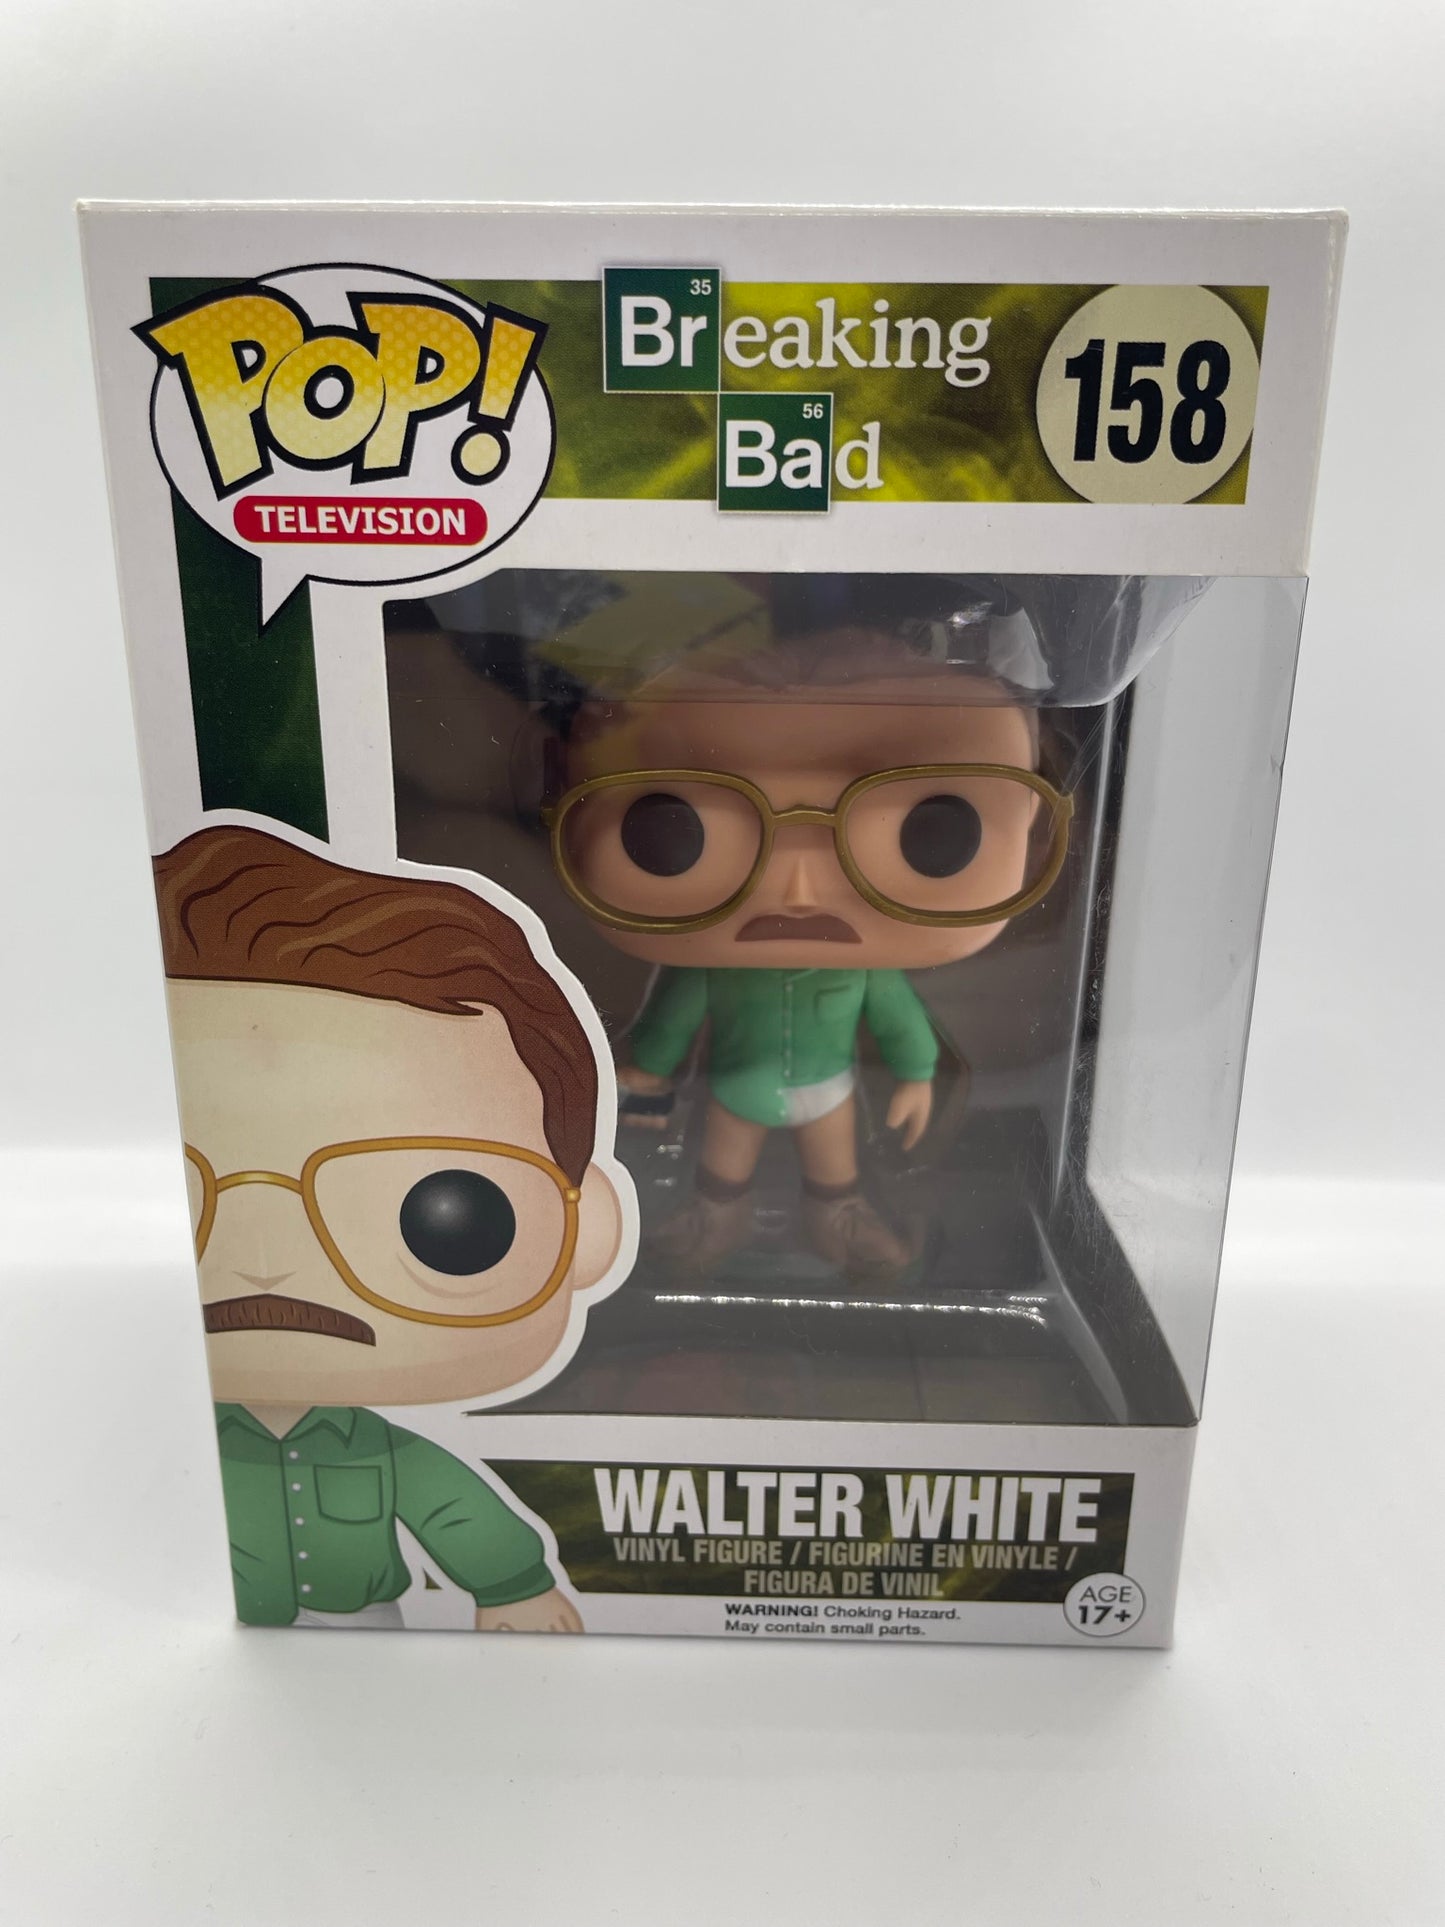 Sold 10/2 2014 Breaking Bad Walter White in Undies 158